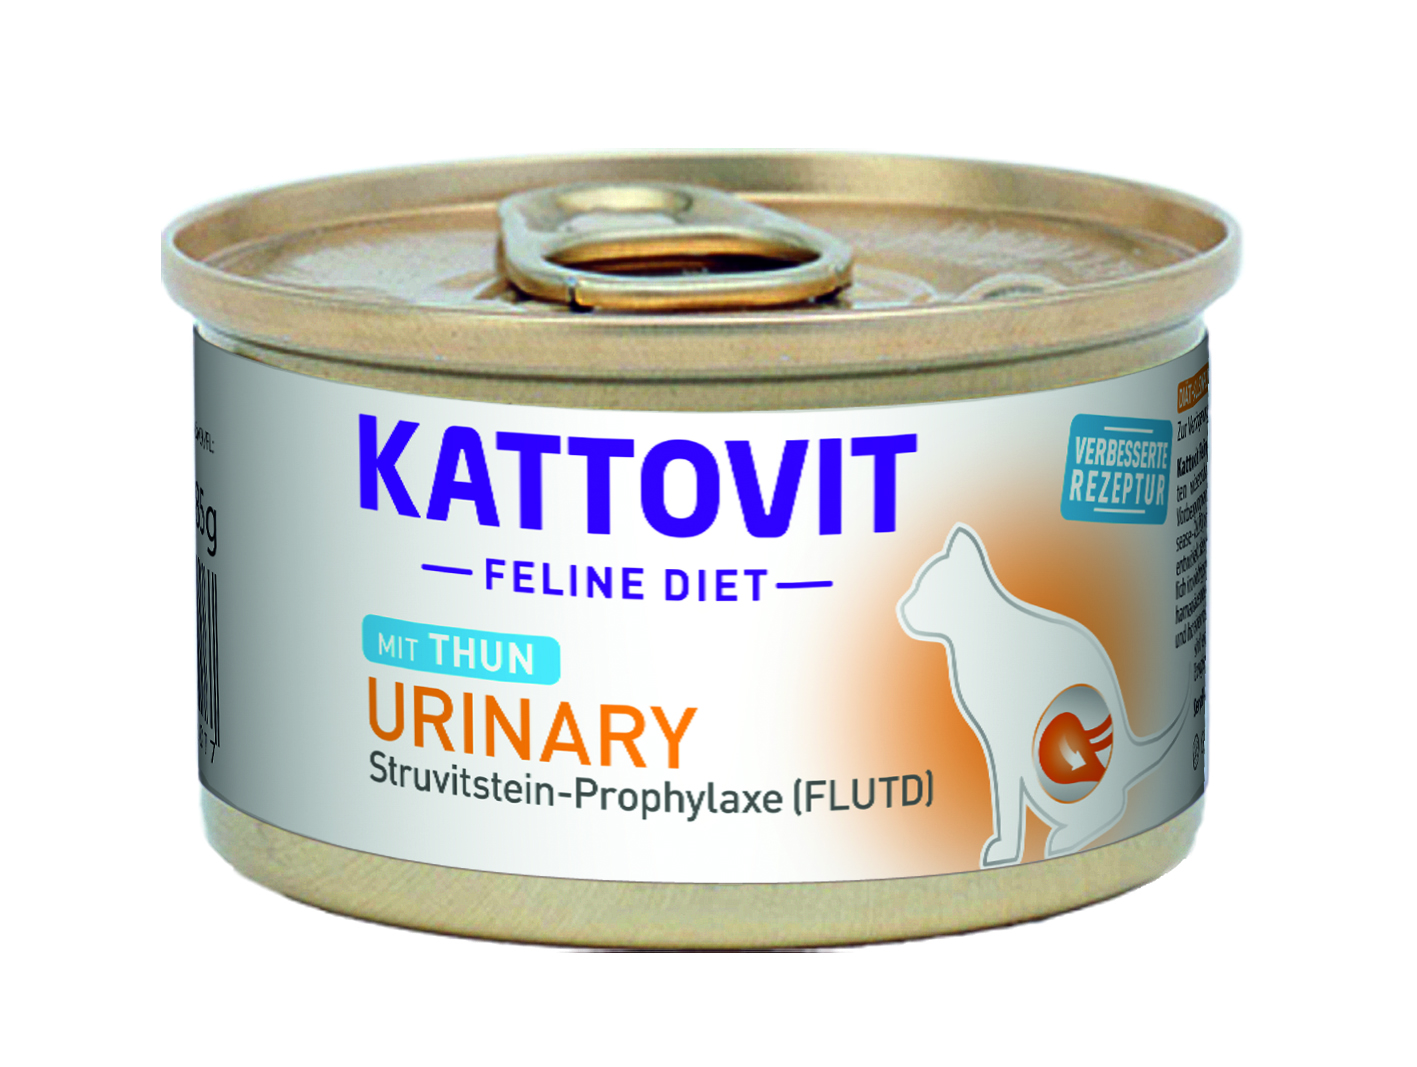 Kattovit Feline Diet Urinary Thun - Struvitstein-Prophylaxe FL